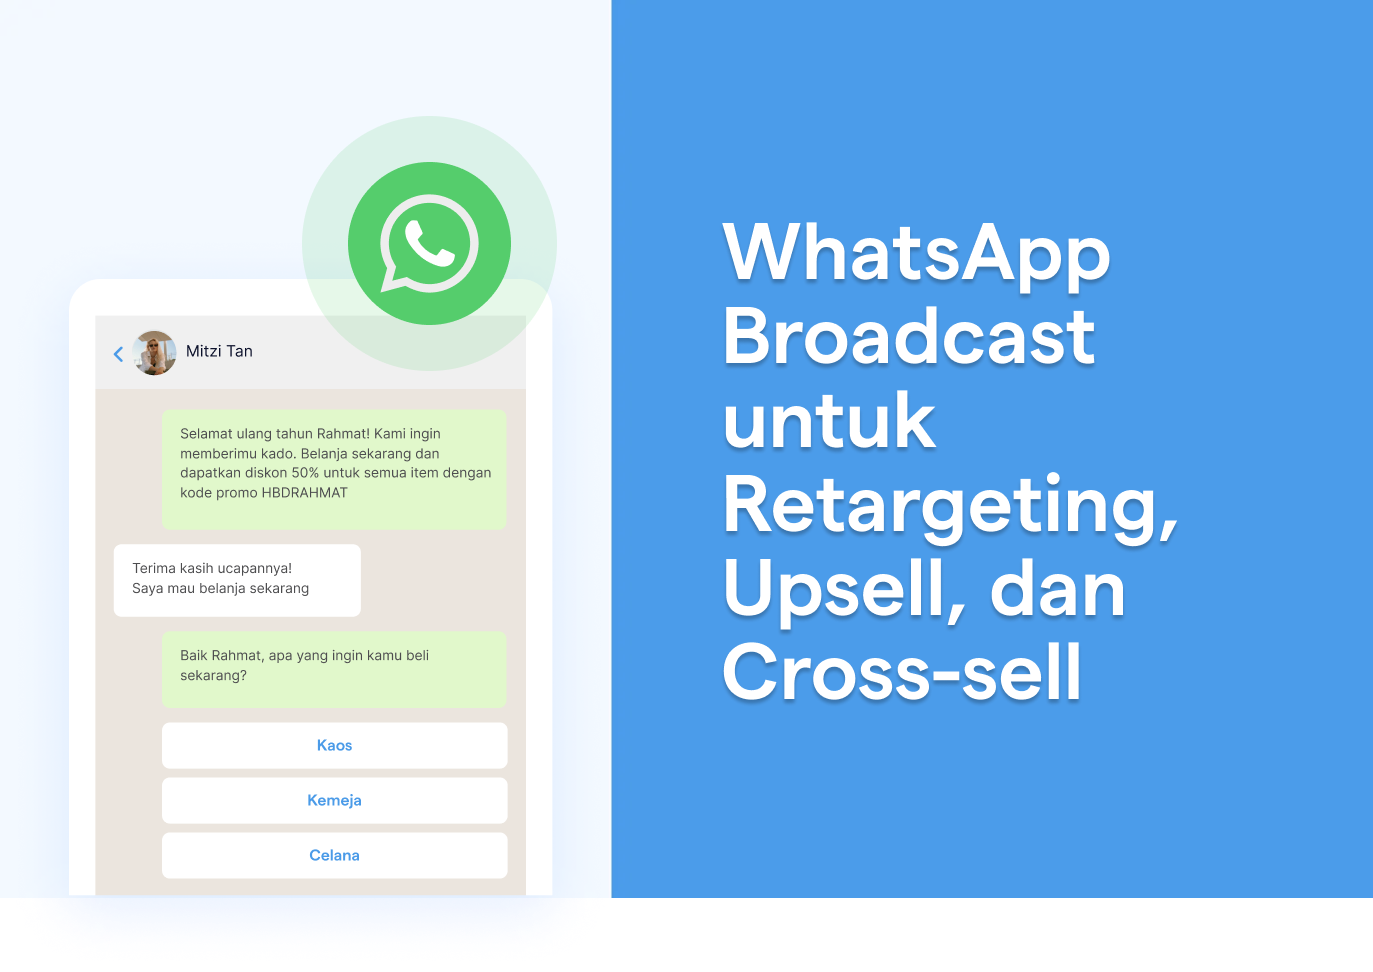 WhatsApp Broadcast untuk Retargeting, Upsell, dan Cross-sell